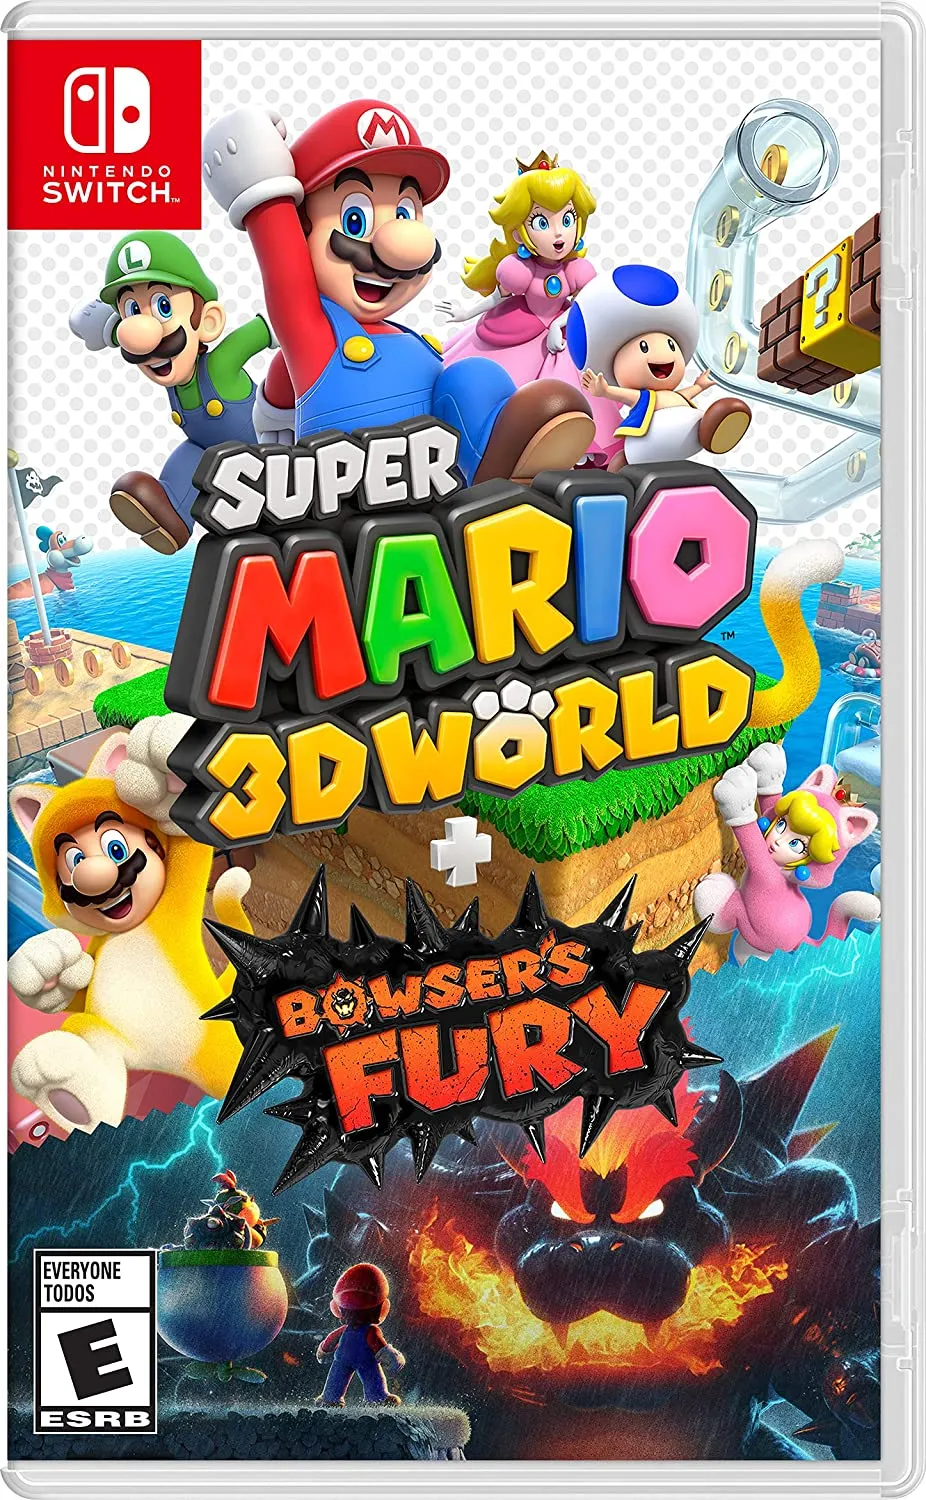 Super Mario 3D World + Bowser's Fury-Cover-Artwork für Nintendo Switch.